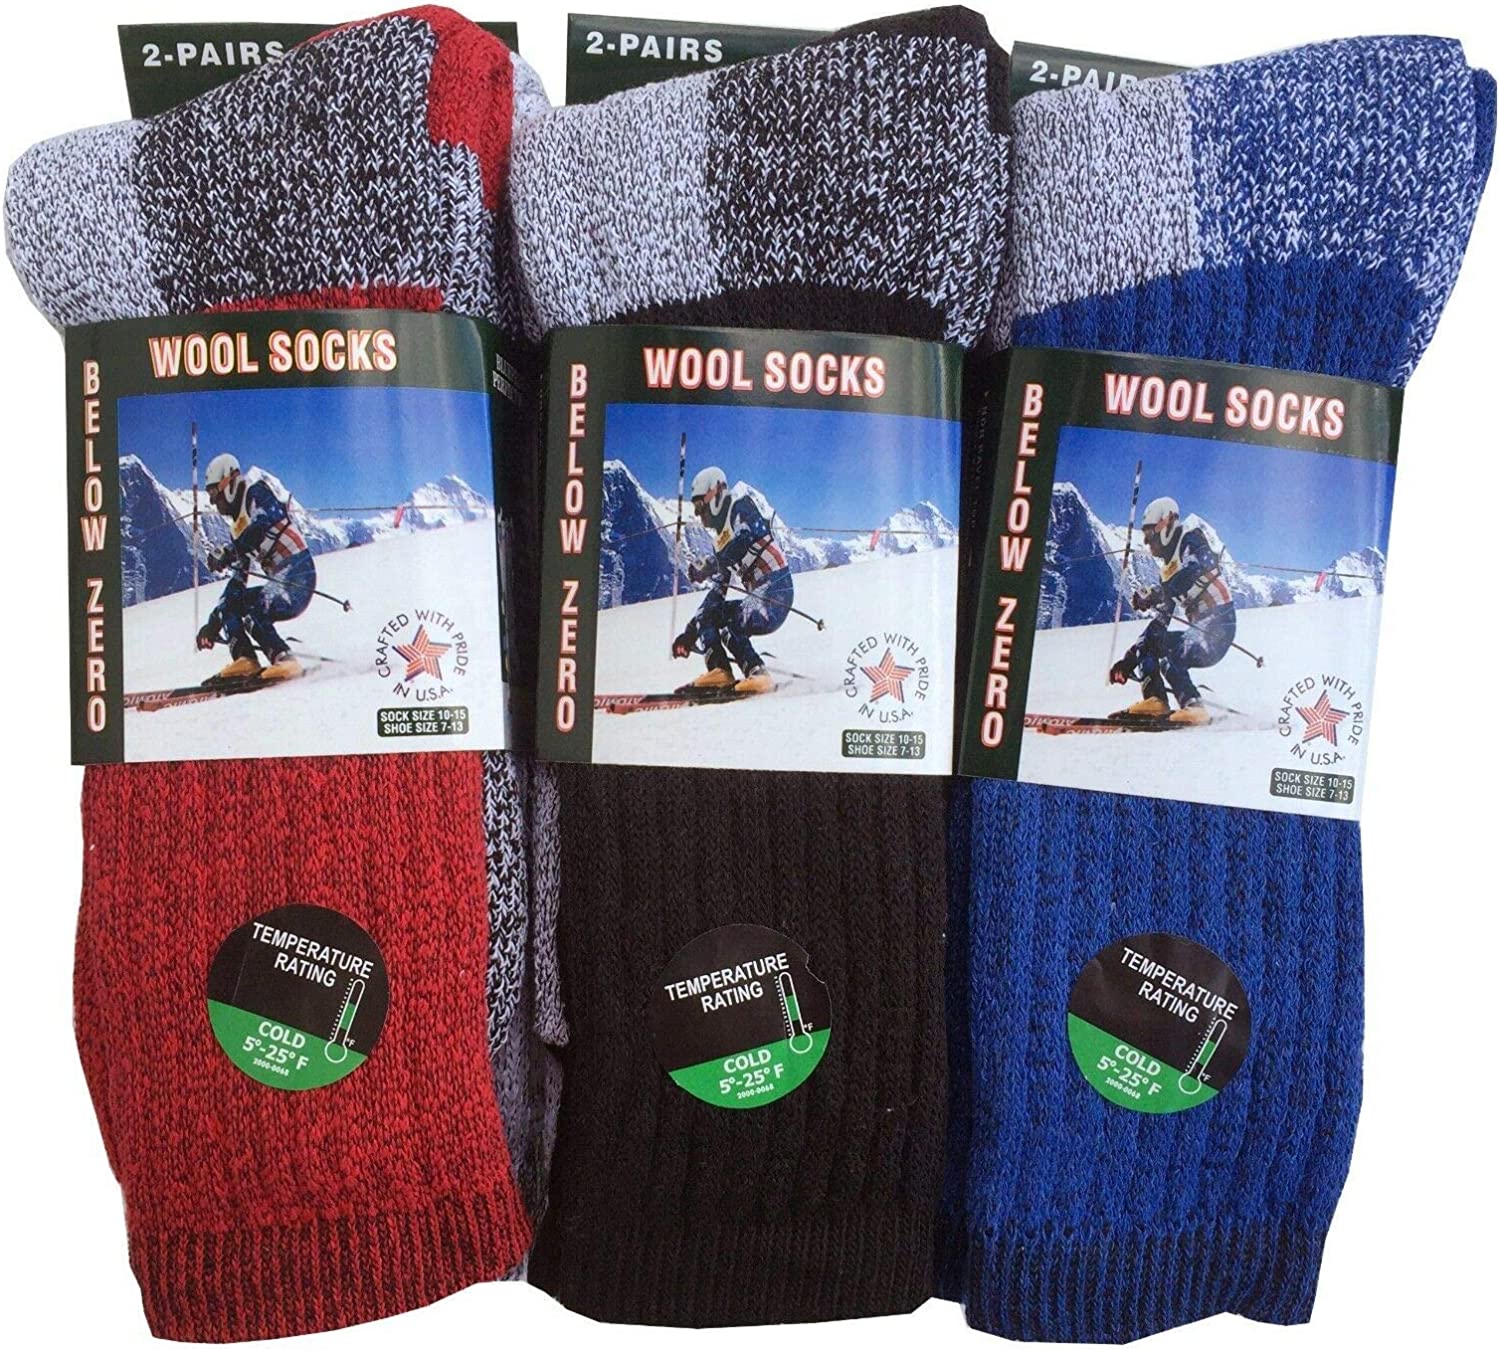 Marino Wool Socks Men 6 Pairs Premium Thermal Socks Insulated for Cold Weather Comfortable Warm Winter Socks